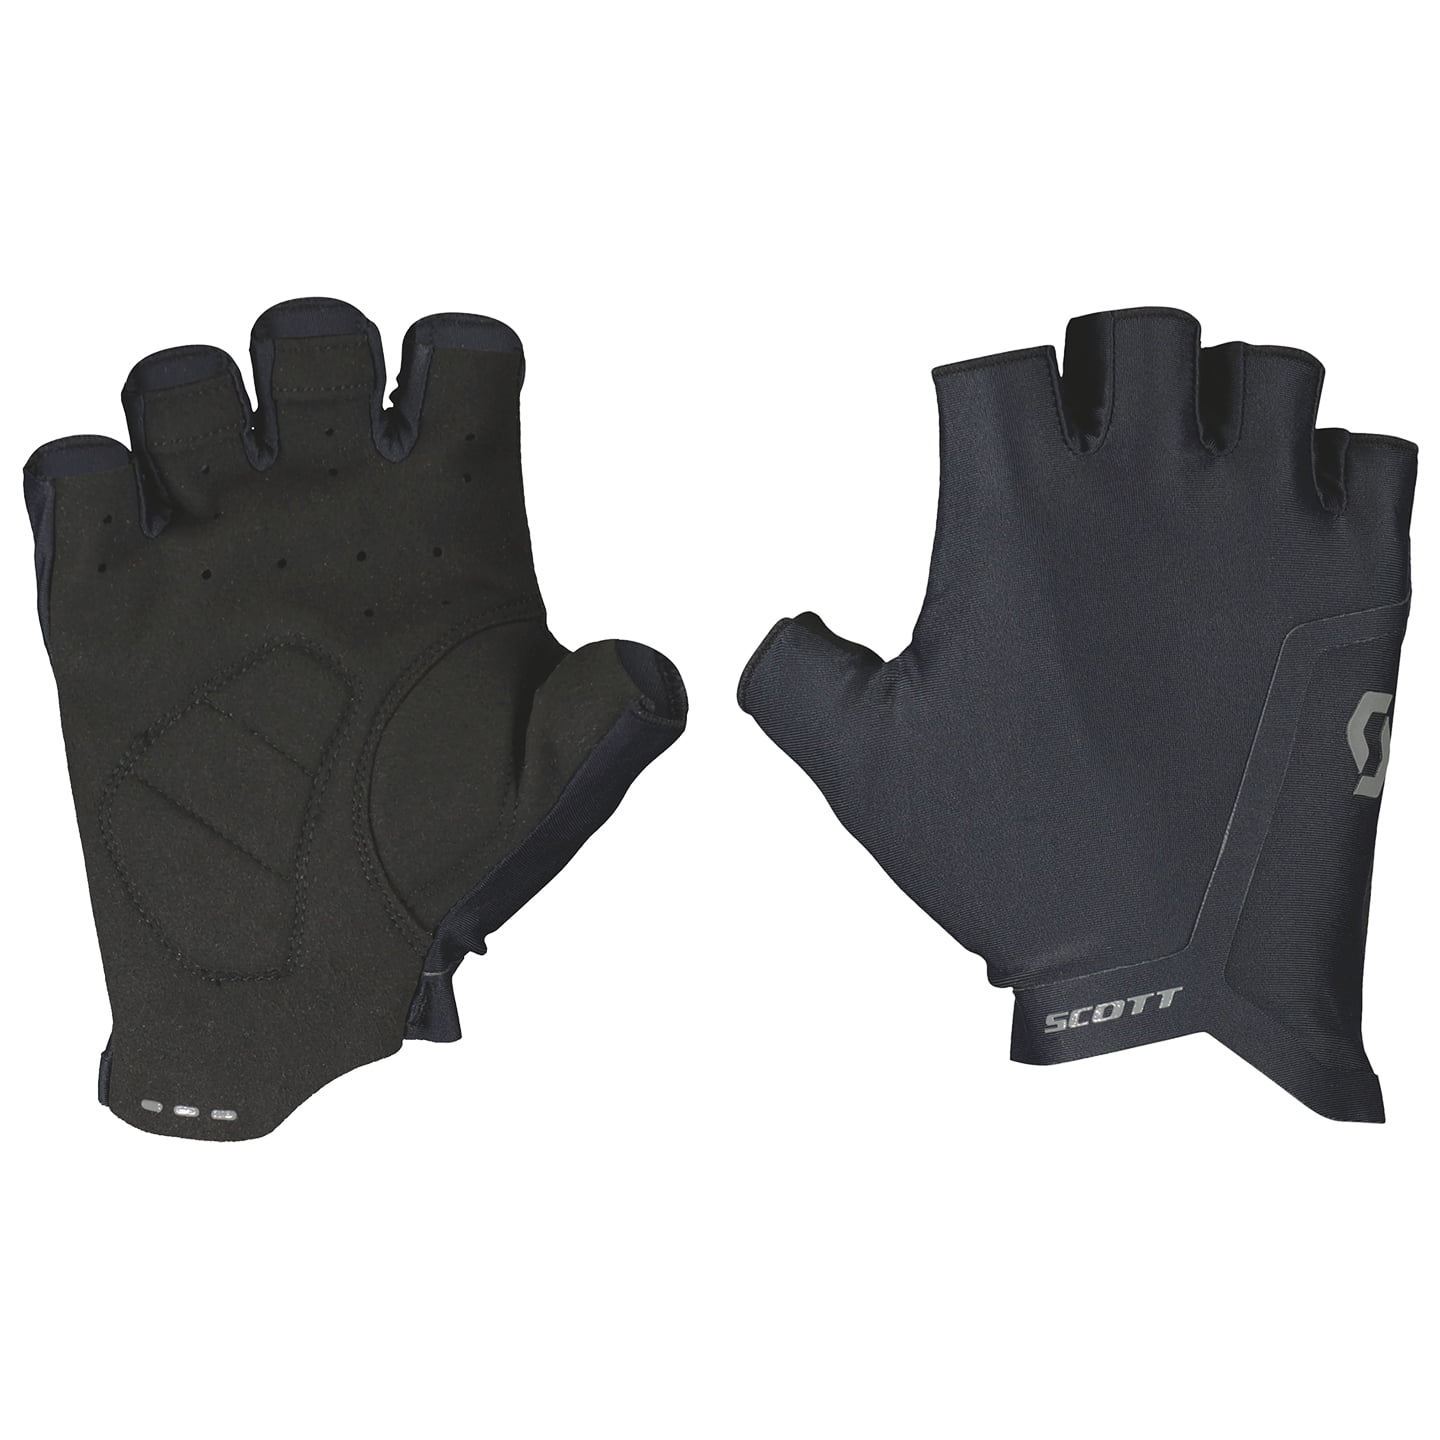 SCOTT Perform Gel Gloves Cycling Gloves, for men, size L, Cycling gloves, Bike gear